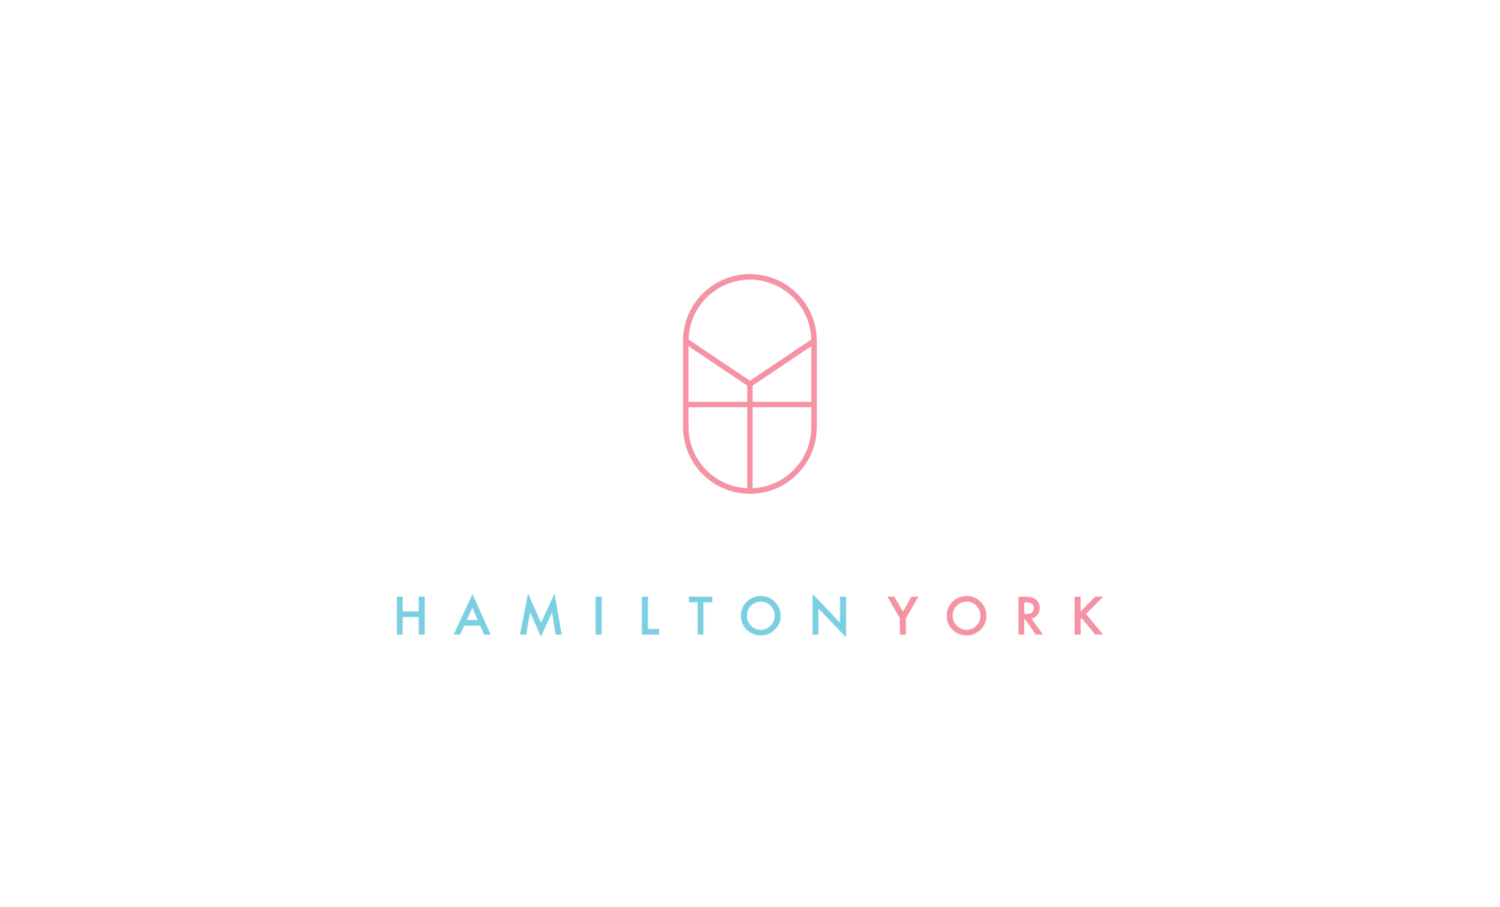 Hamilton York